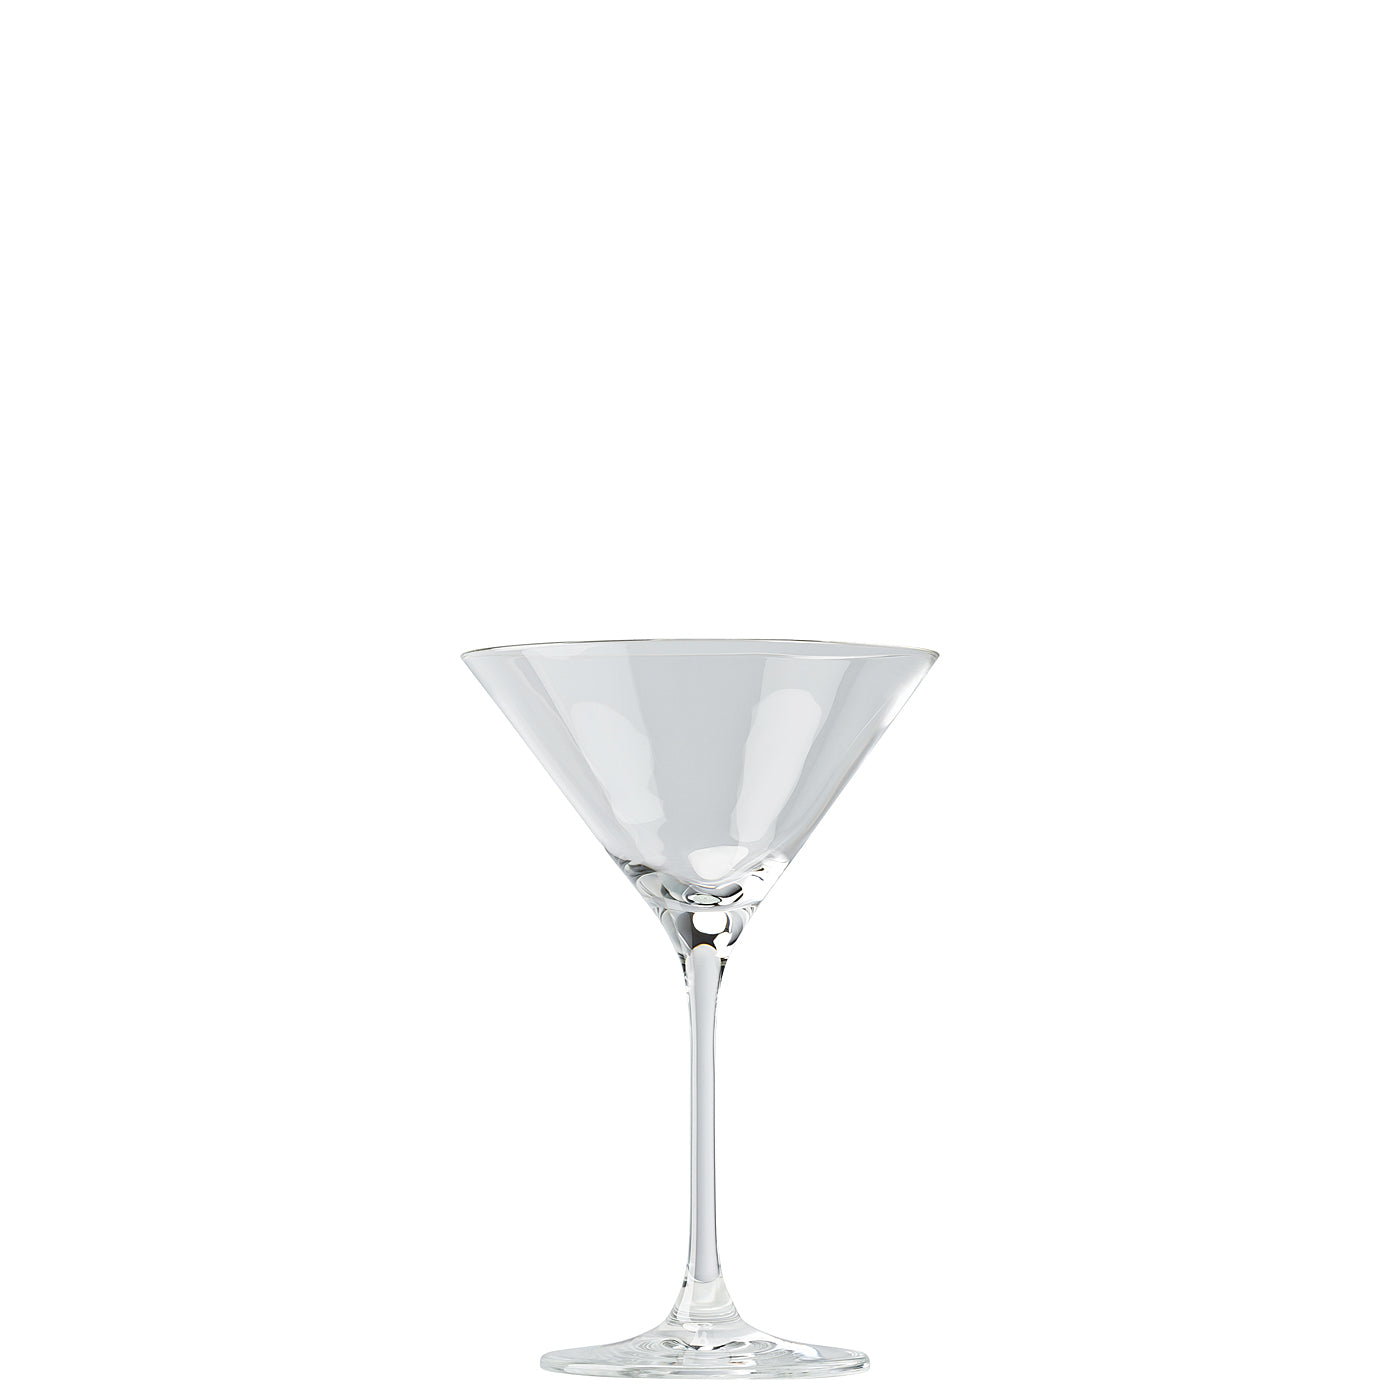 ROSENTHAL diVino Calice Bicchiere Cocktail Martini Cristallo 260ml